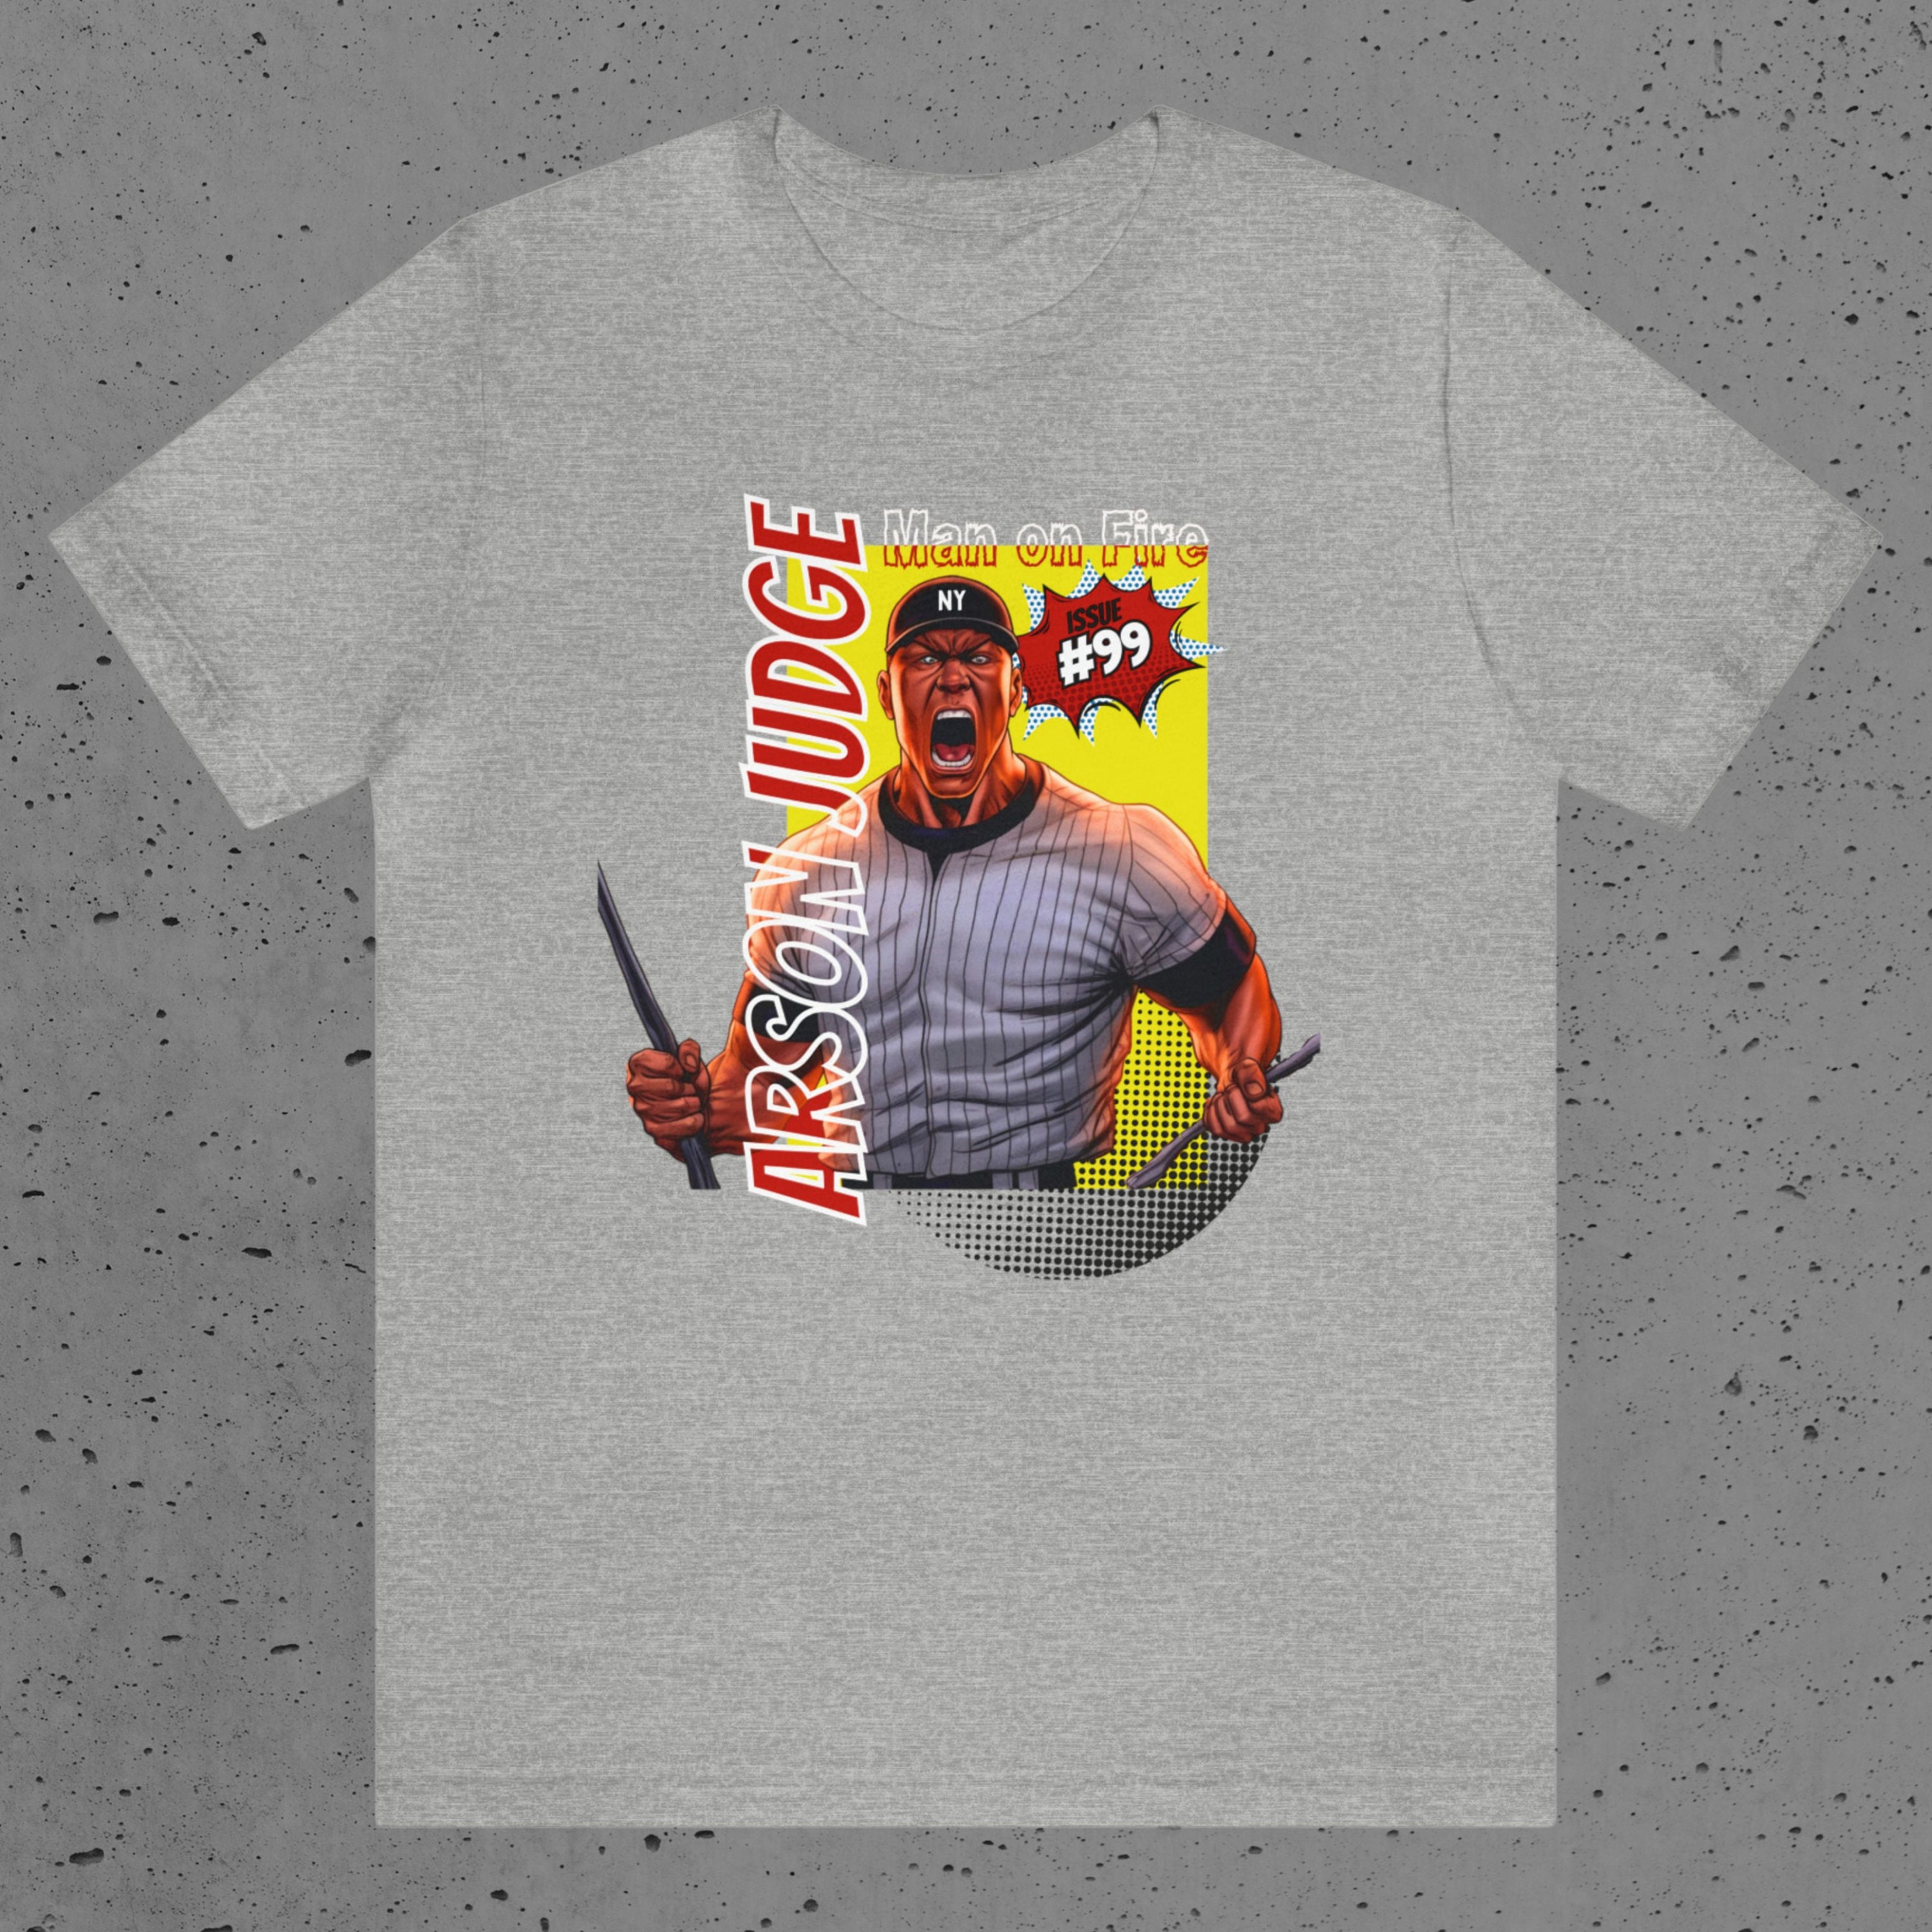 Comic Book Shirt Judge Shirt New York Shirt Baseball Shirt 